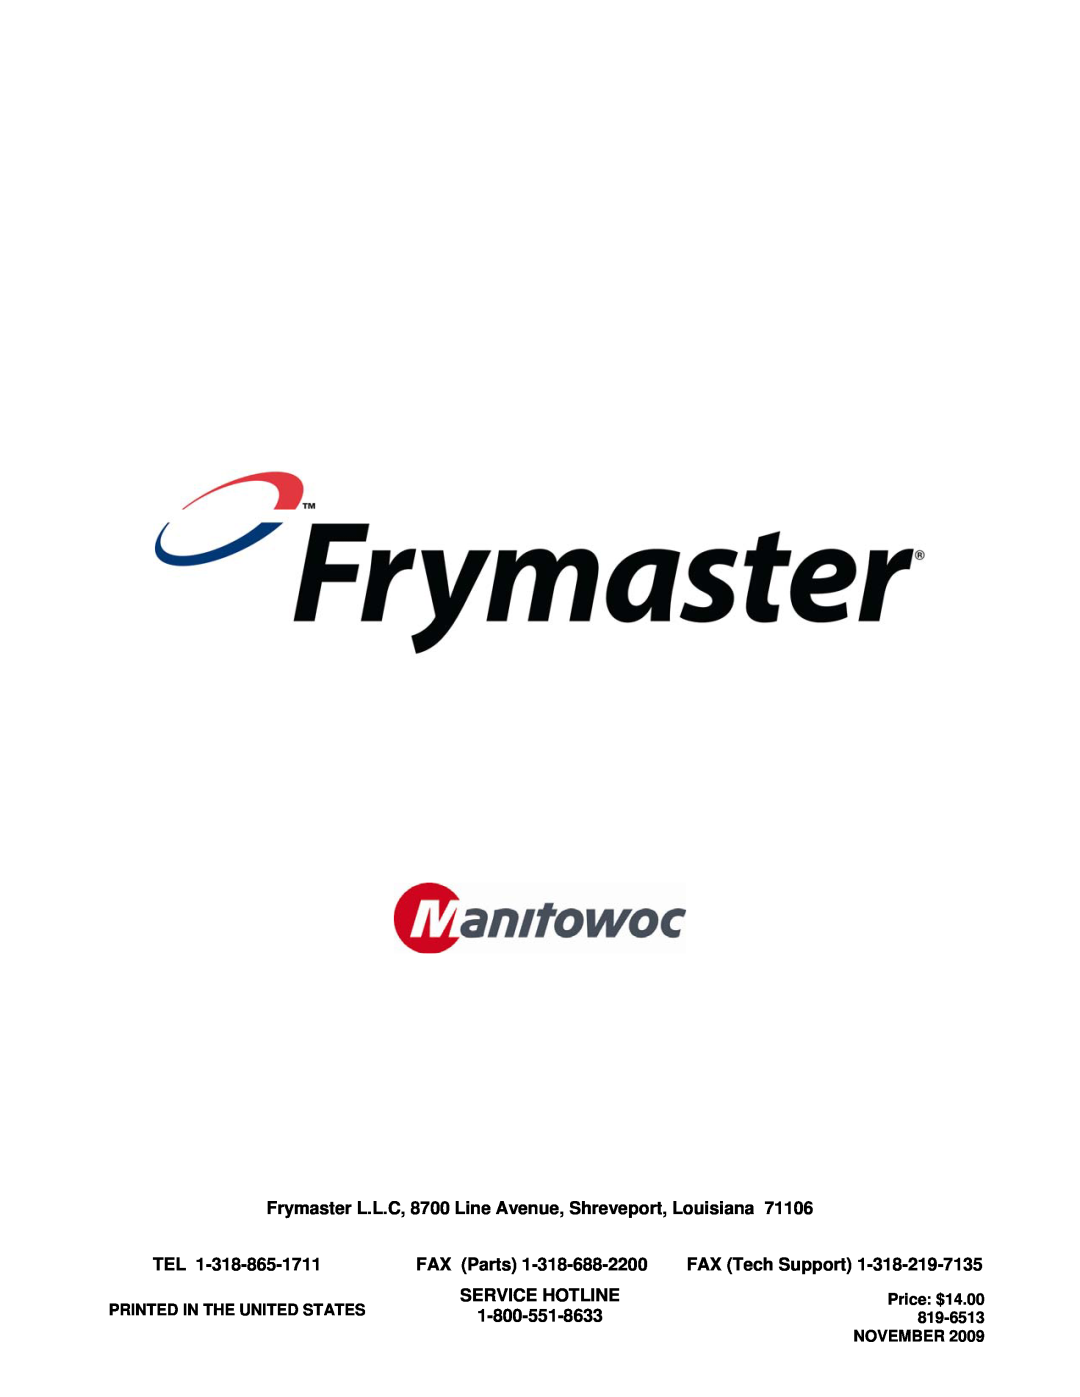 Frymaster J2X, J1X Frymaster L.L.C, 8700 Line Avenue, Shreveport, Louisiana, FAX Parts, FAX Tech Support, Service Hotline 